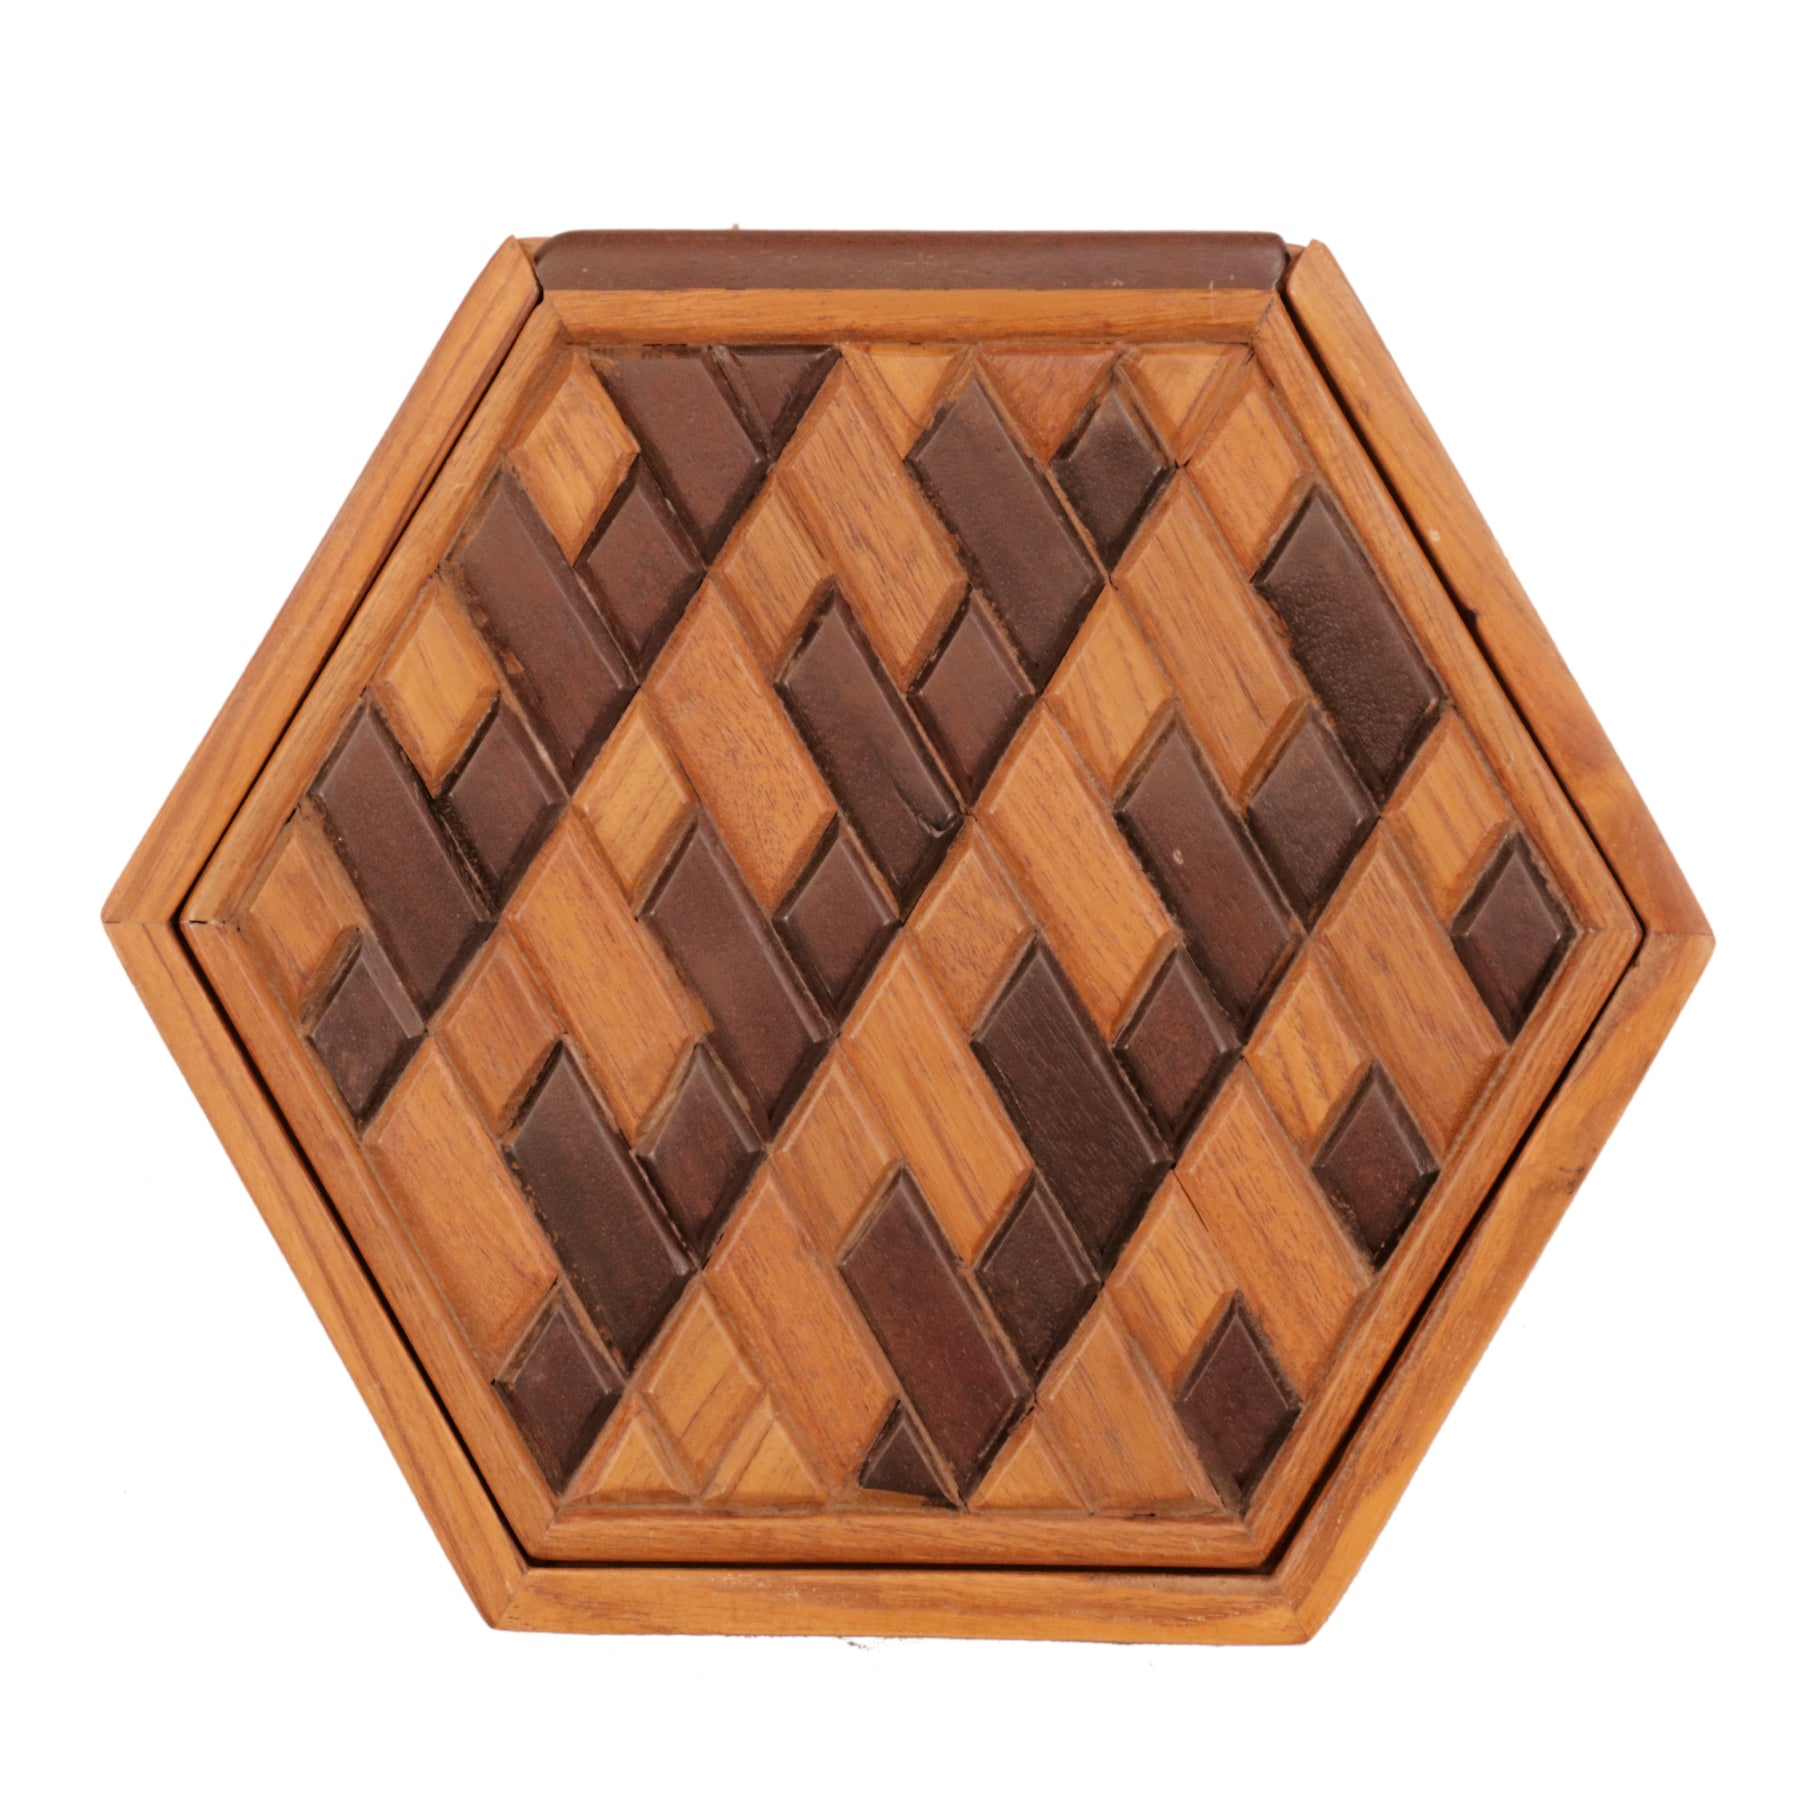 Checkered Branch Box Wooden Box